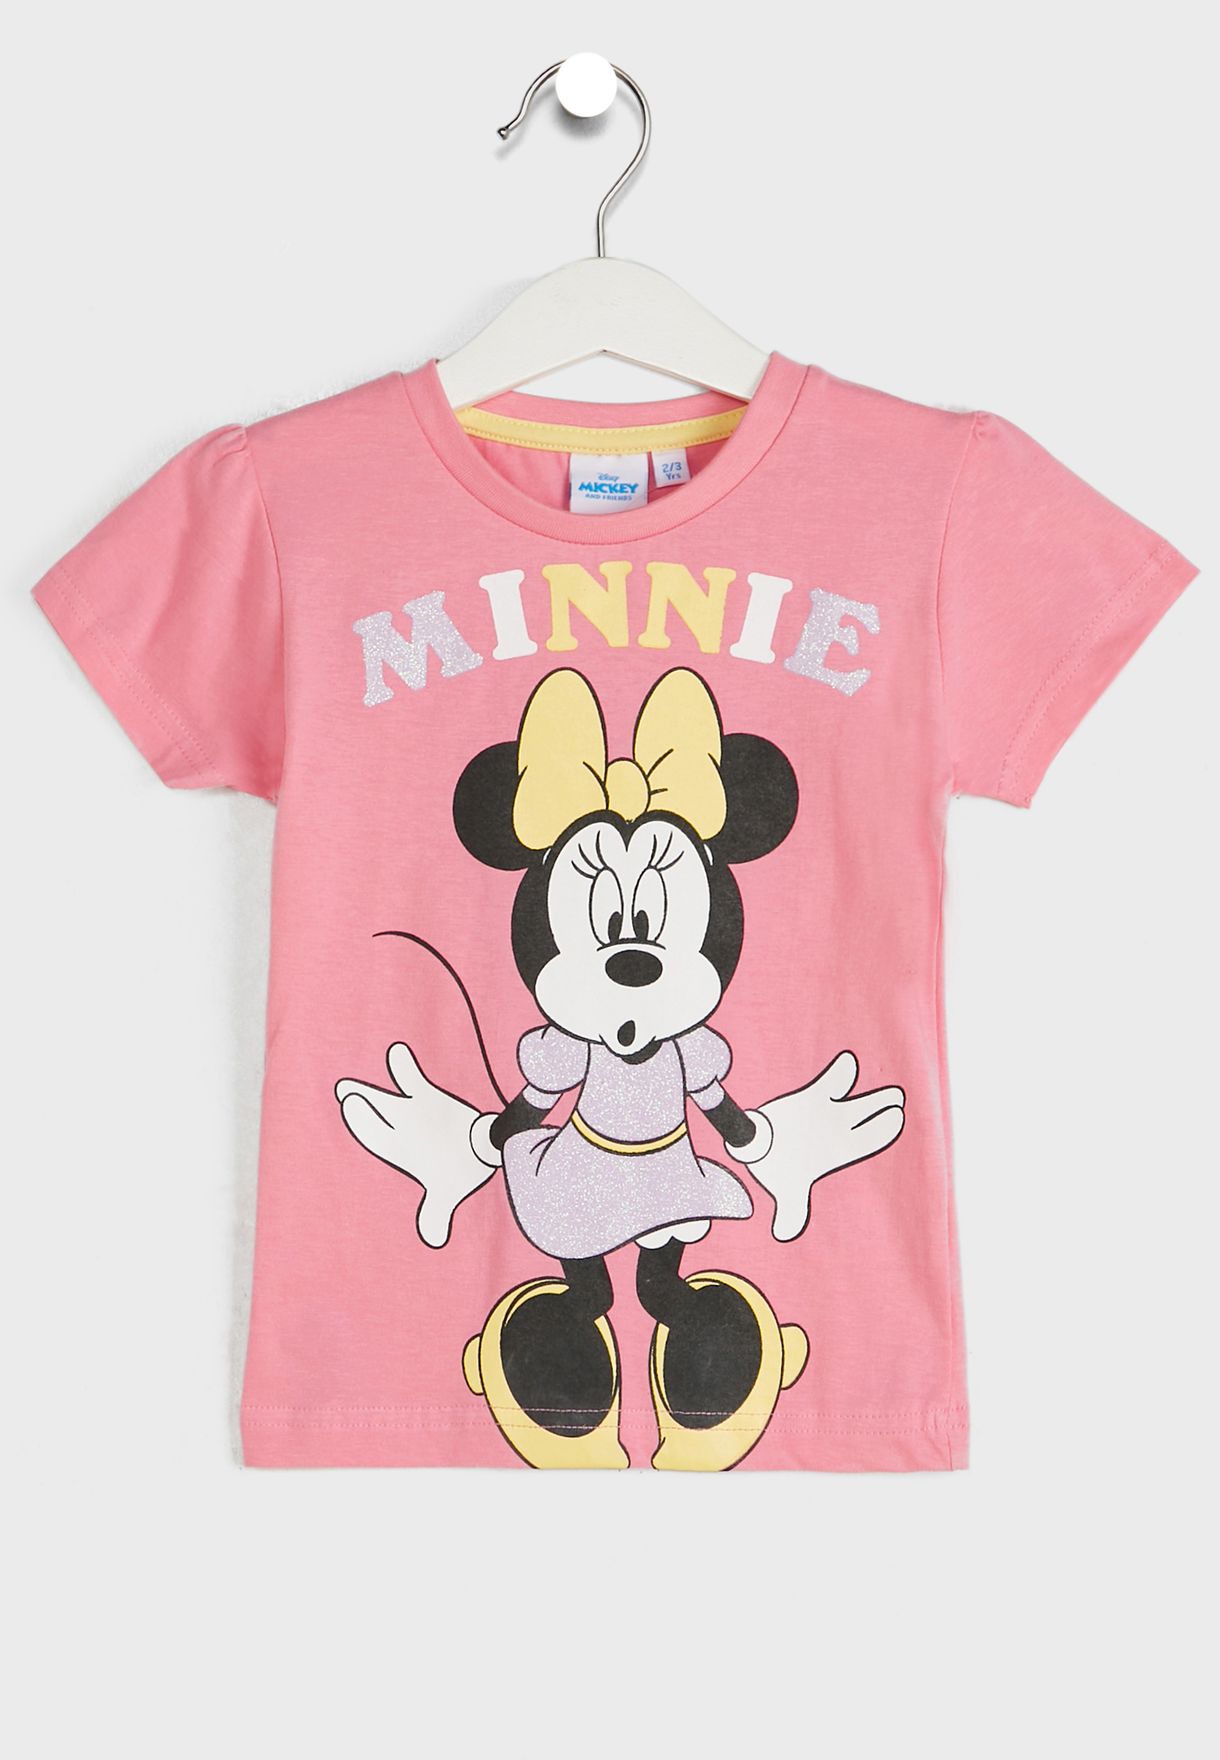 Kids Minnie Mouse Pyjama Set